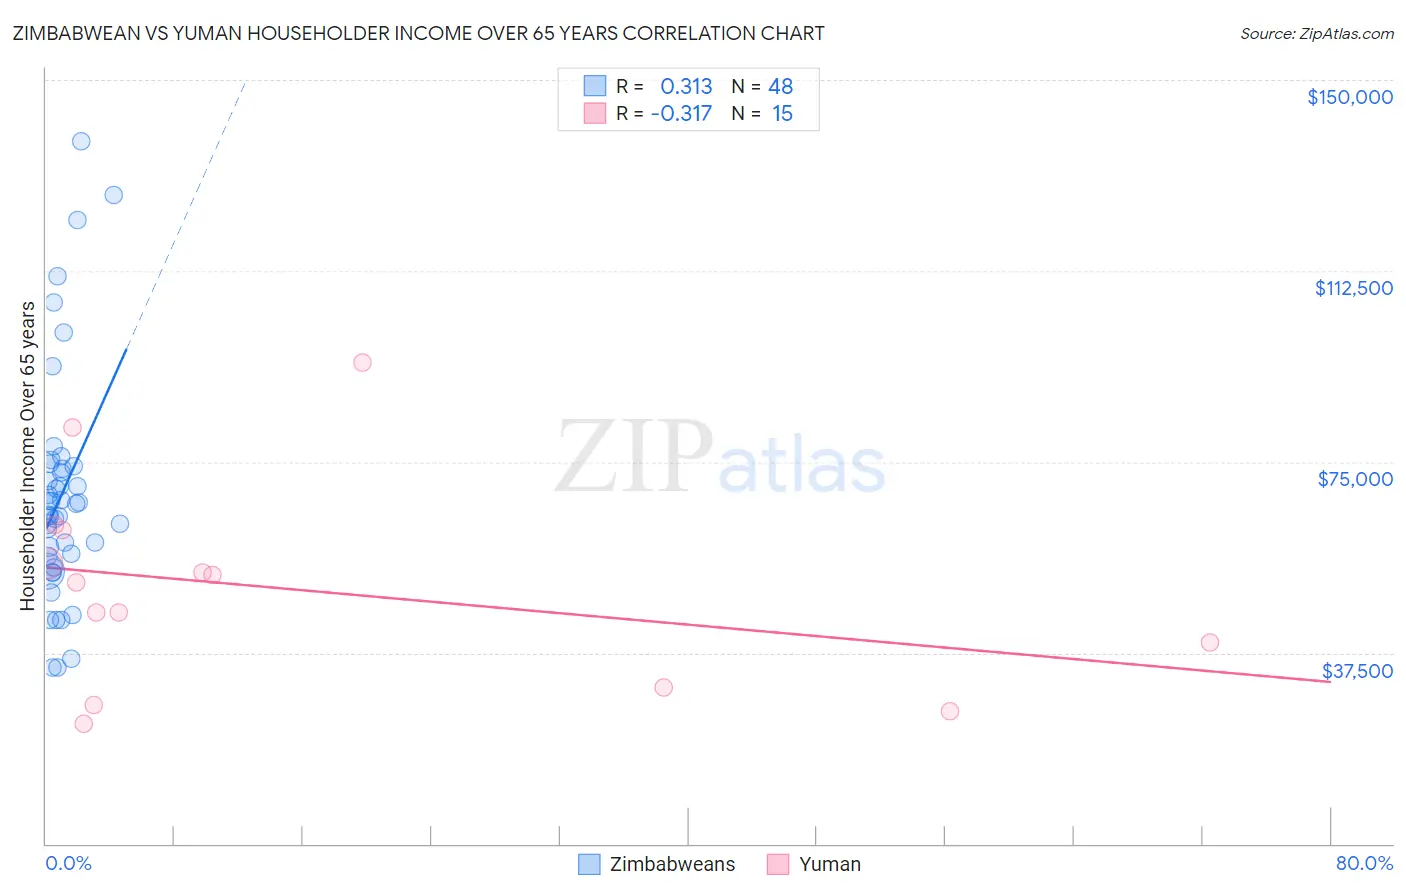 Zimbabwean vs Yuman Householder Income Over 65 years